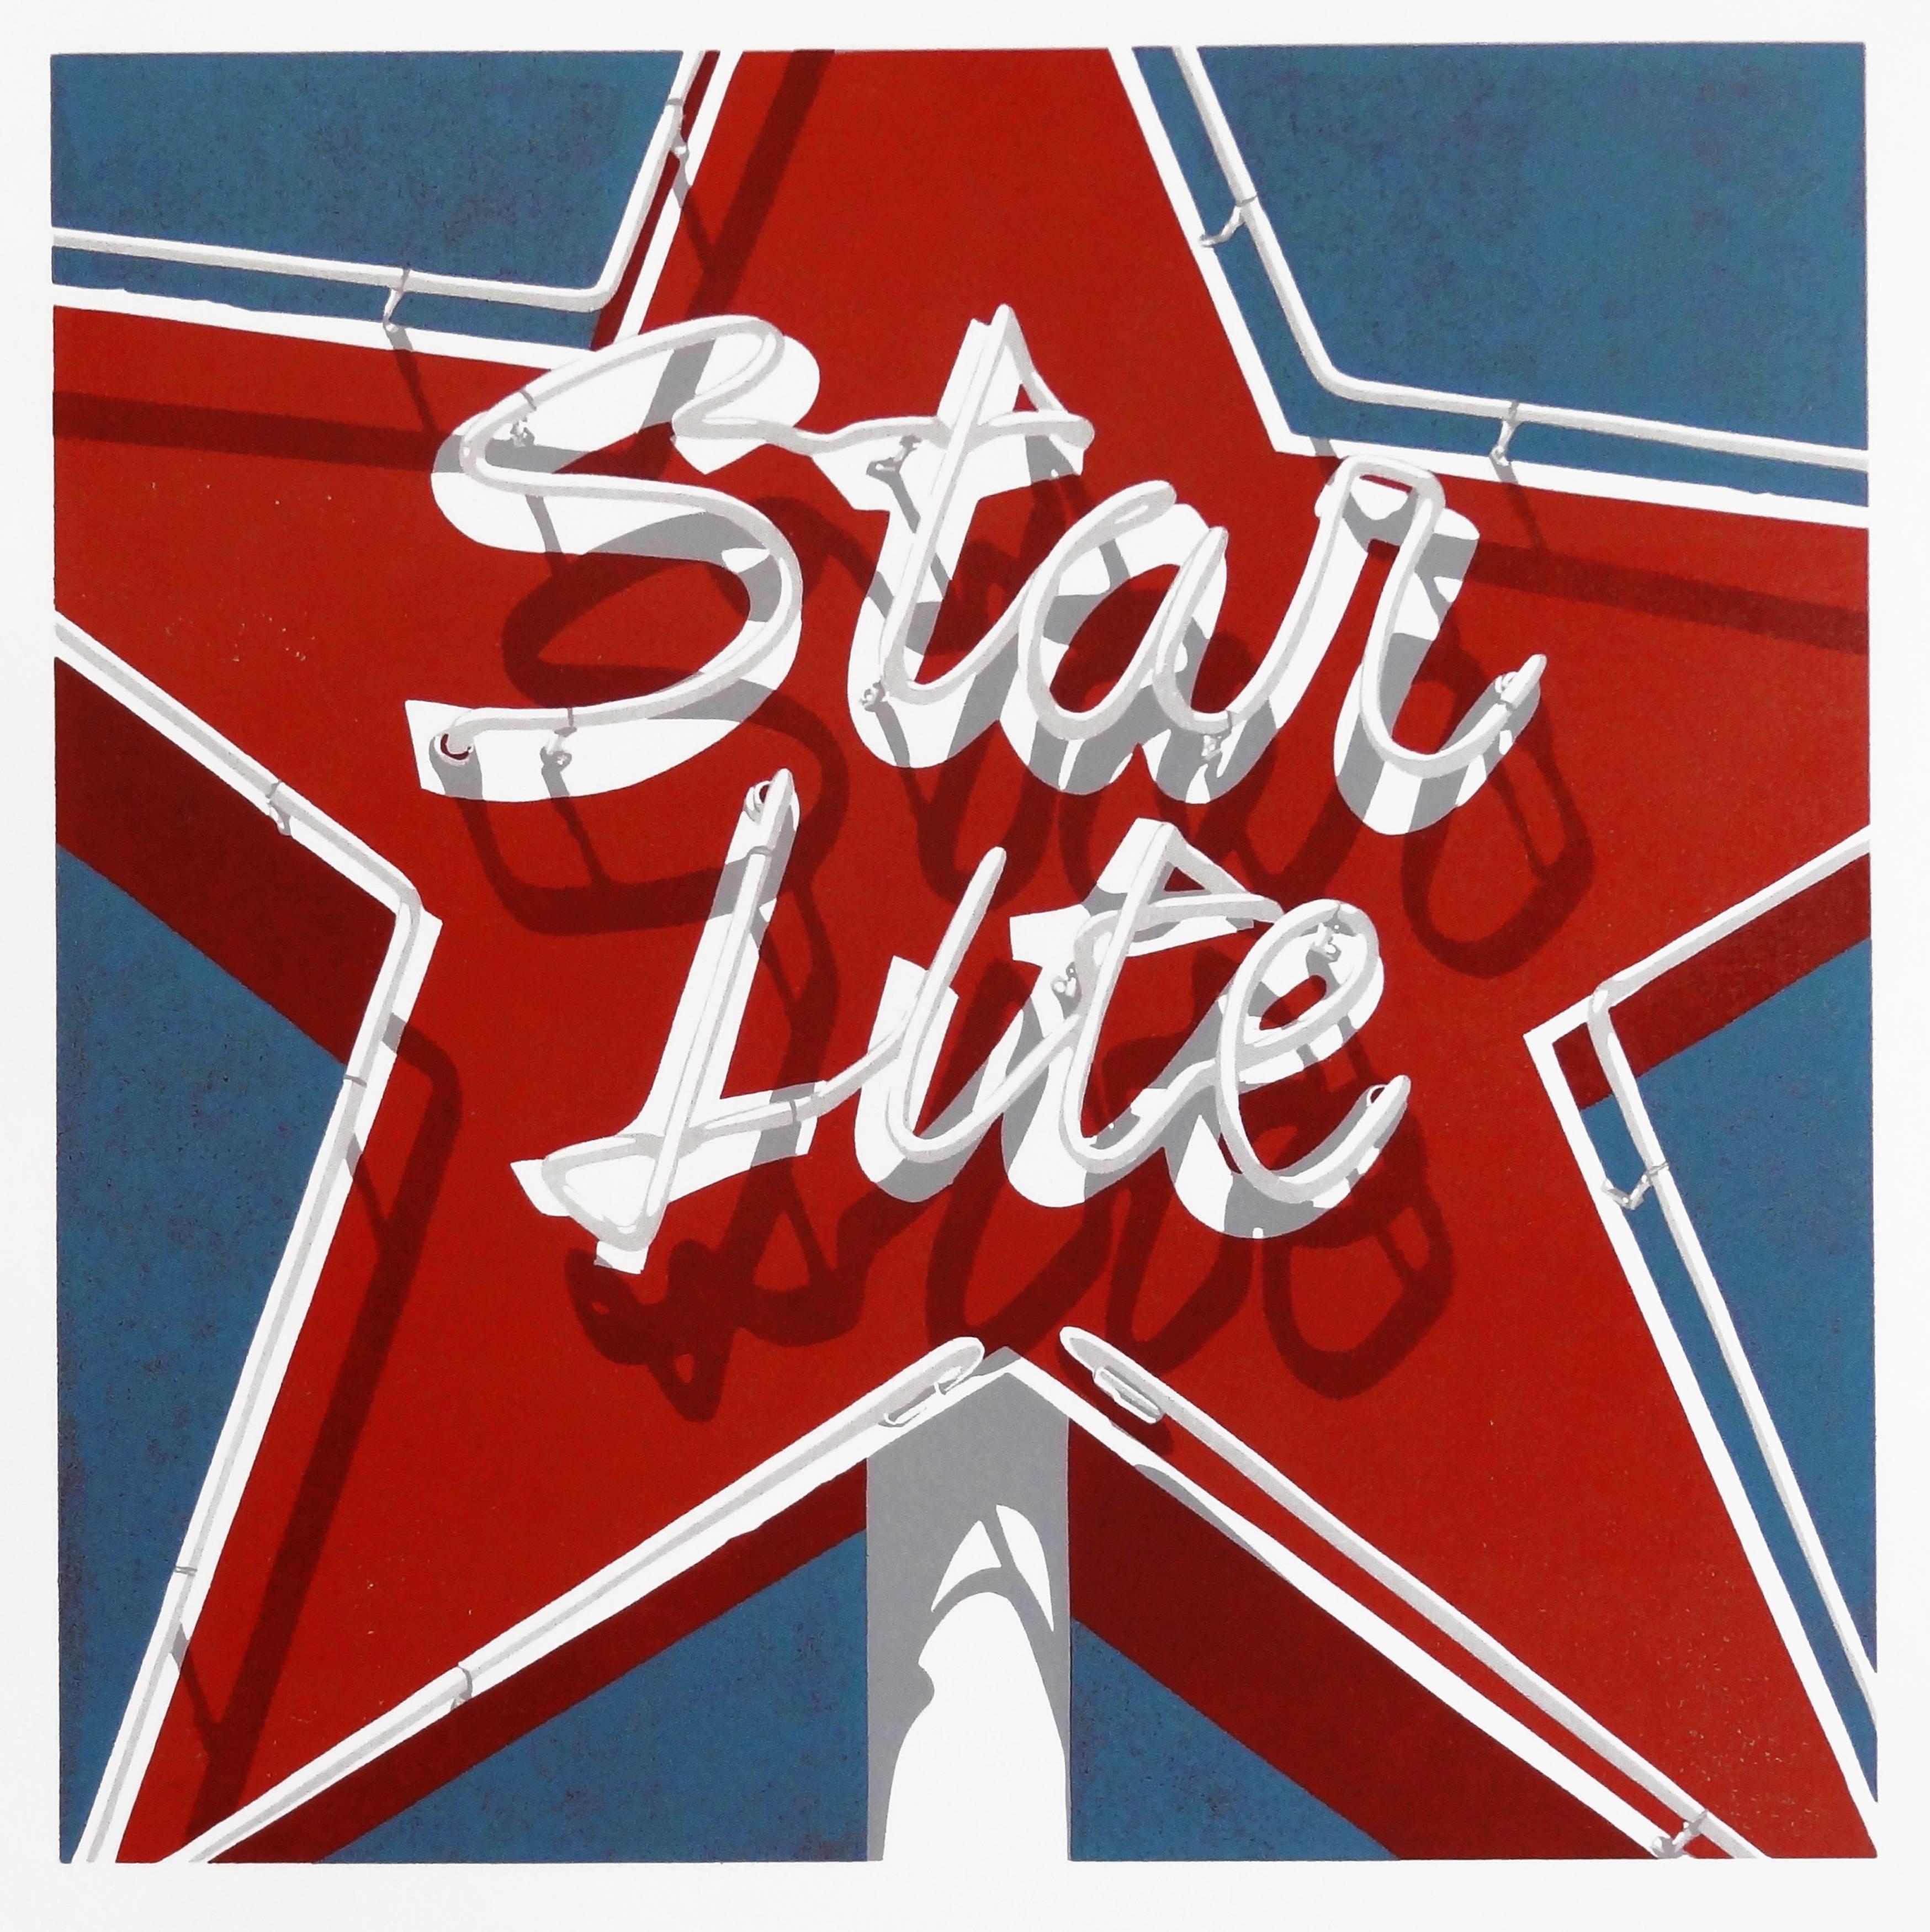 STARLITE, STARBRITE - Print by Dave Lefner